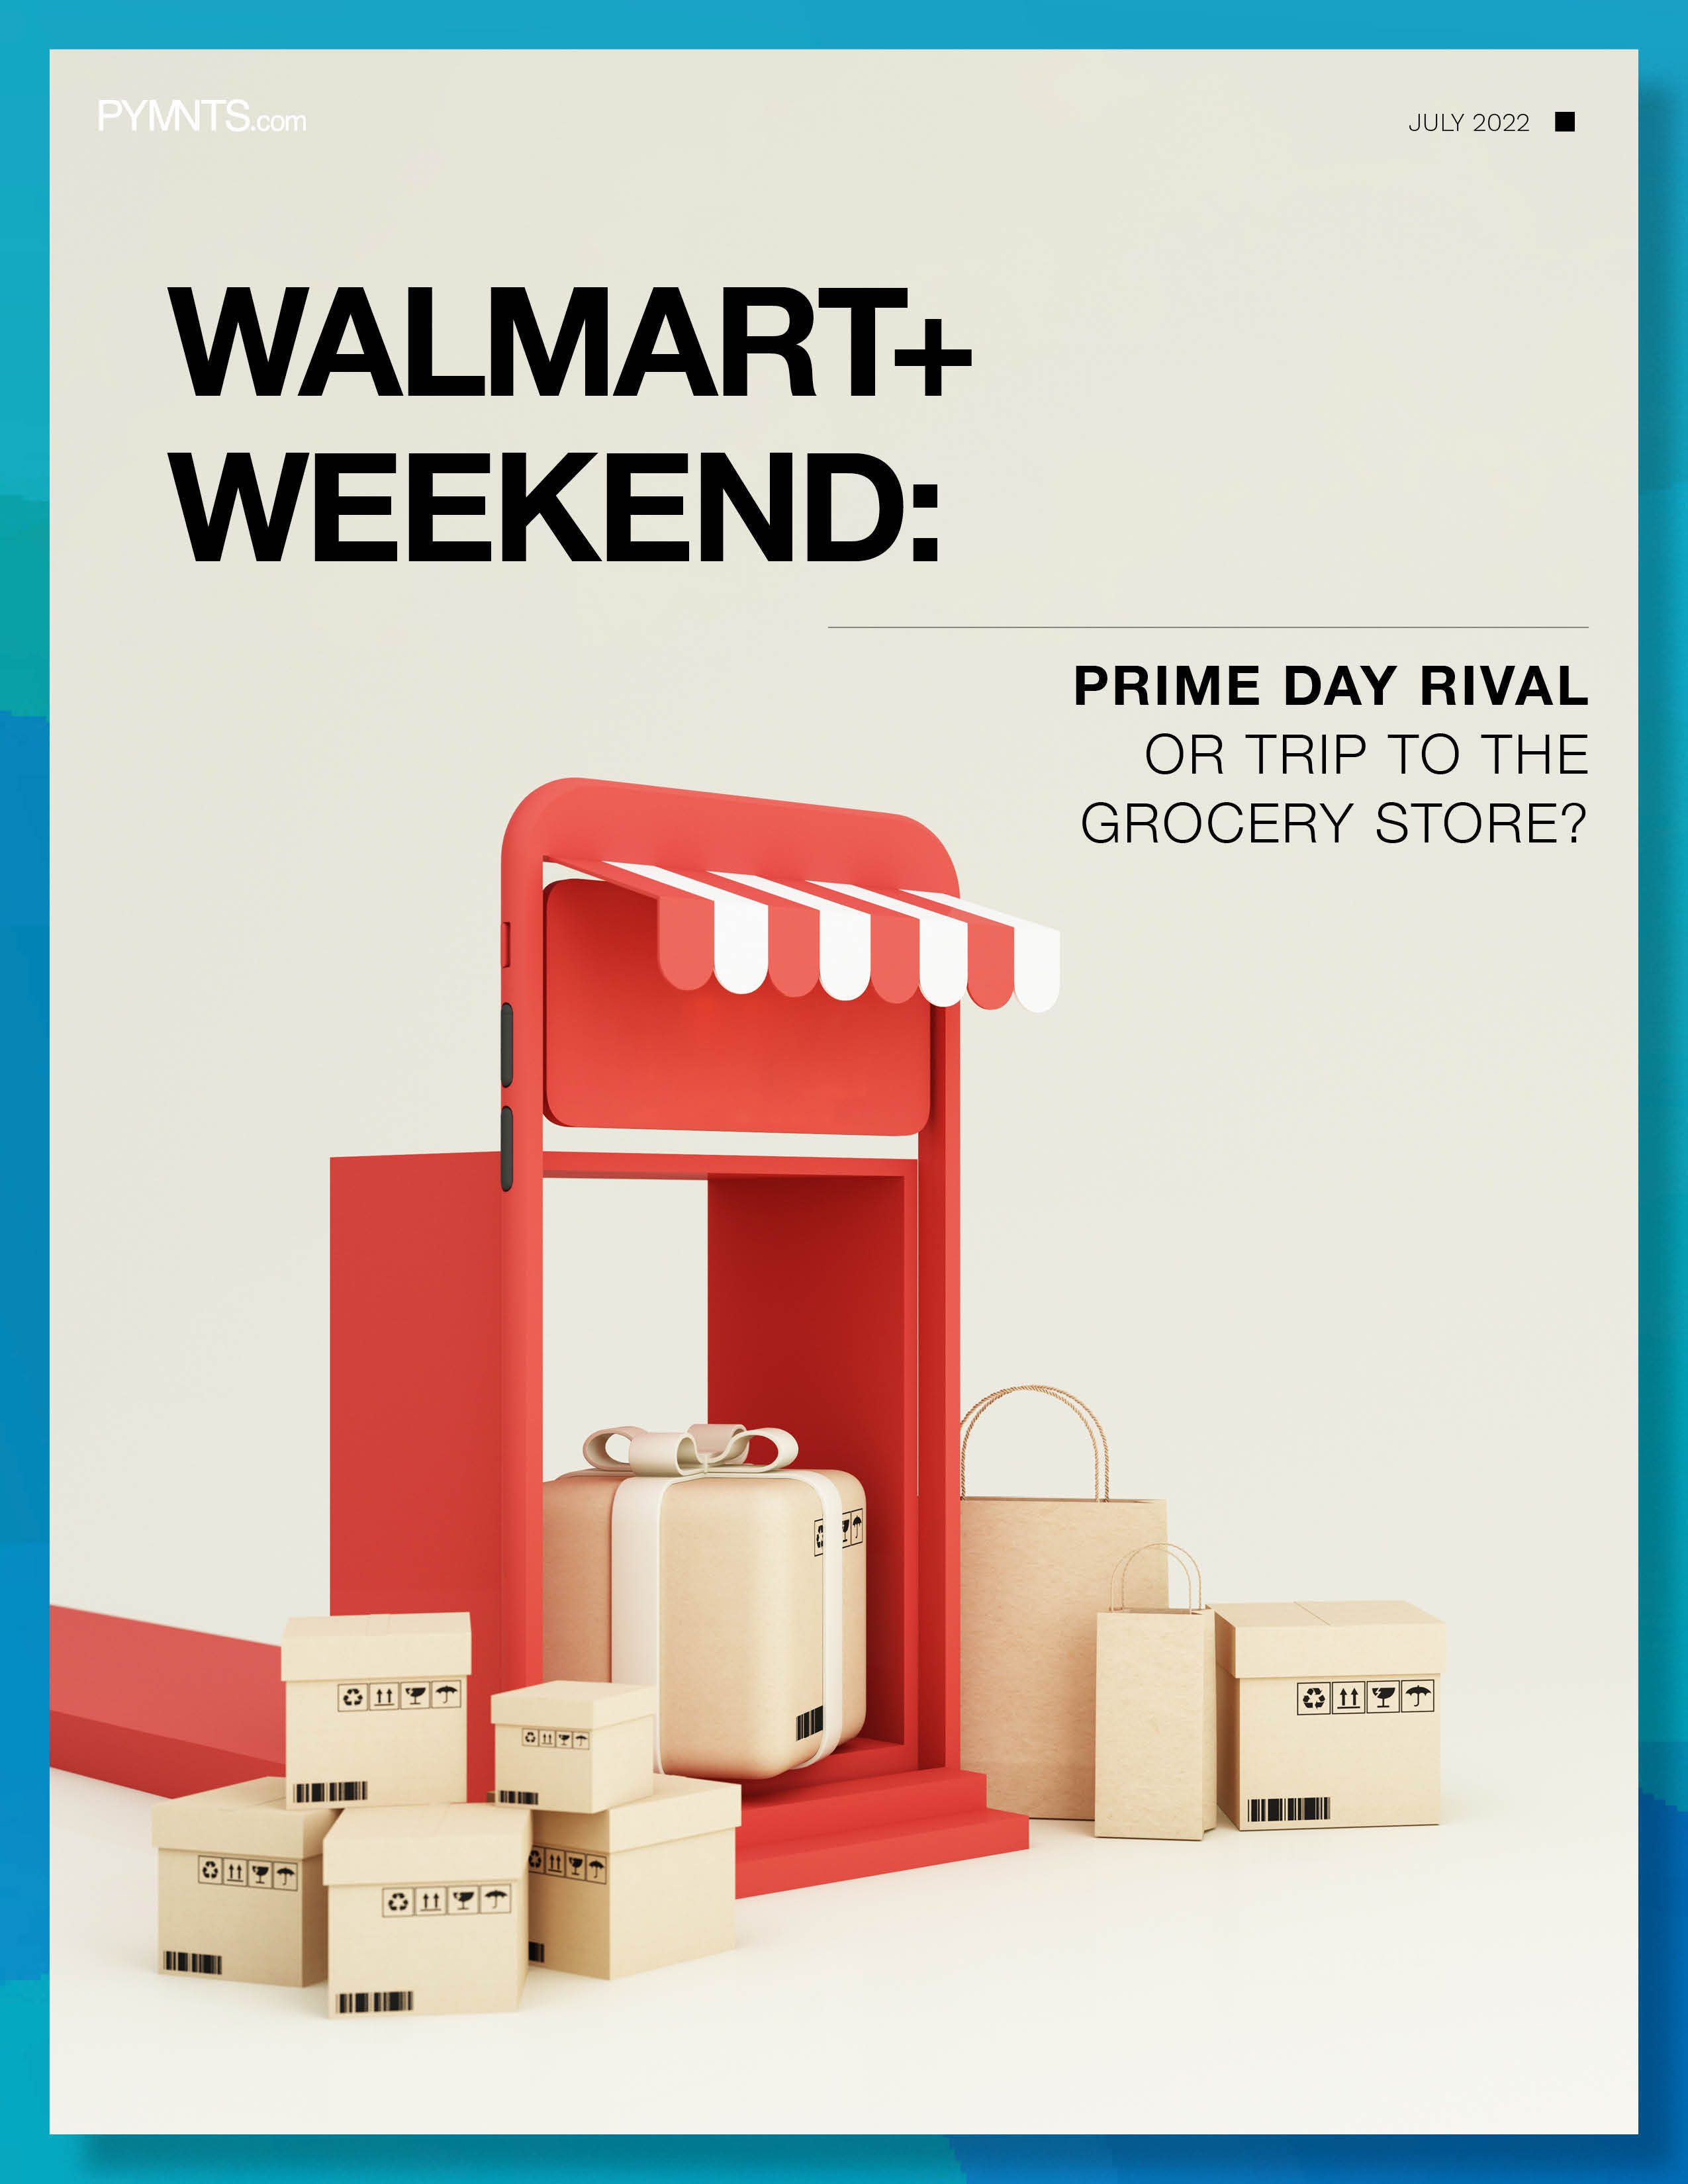 Walmart+ Weekend 2022: Save $50 on a Nutribullet